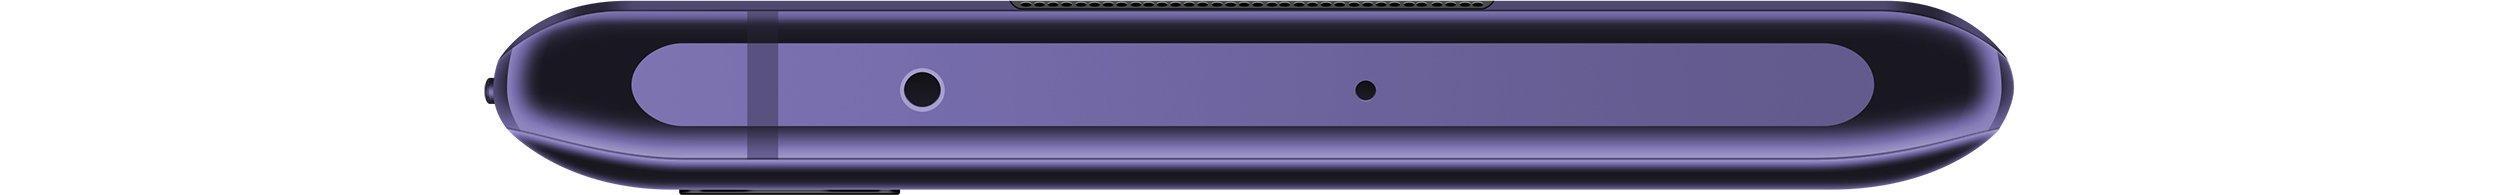 Купить Смартфон Xiaomi Mi Note 10 Lite 6/64Gb Purple